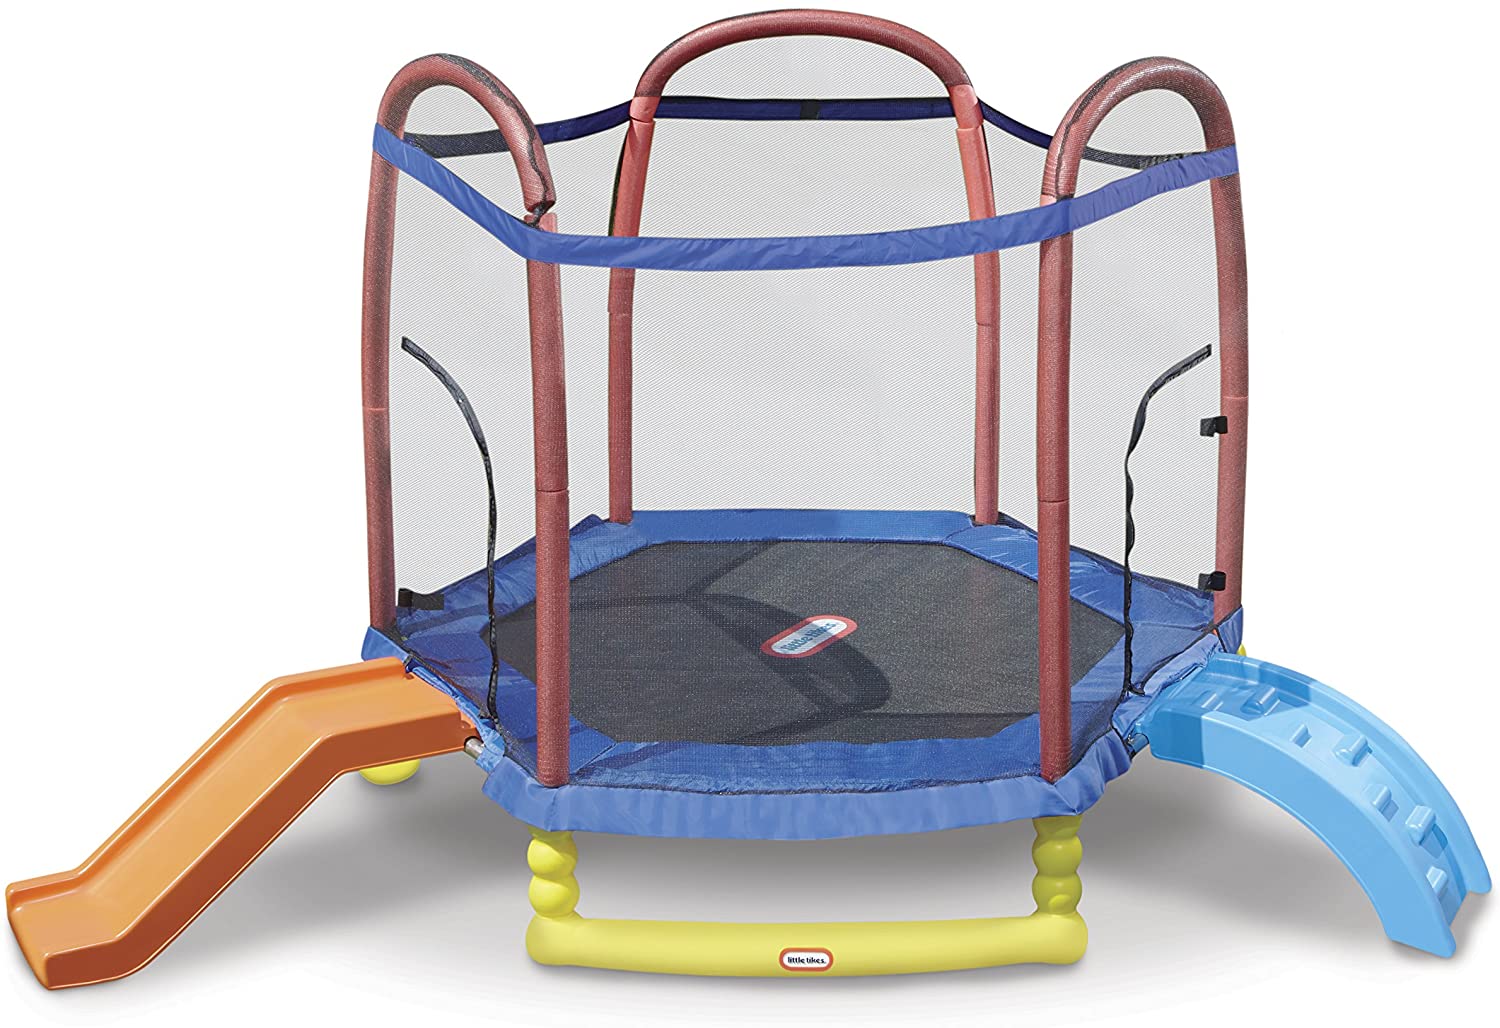 Little Tikes Climb ‘N Slide Playground Trampoline, 7-Feet